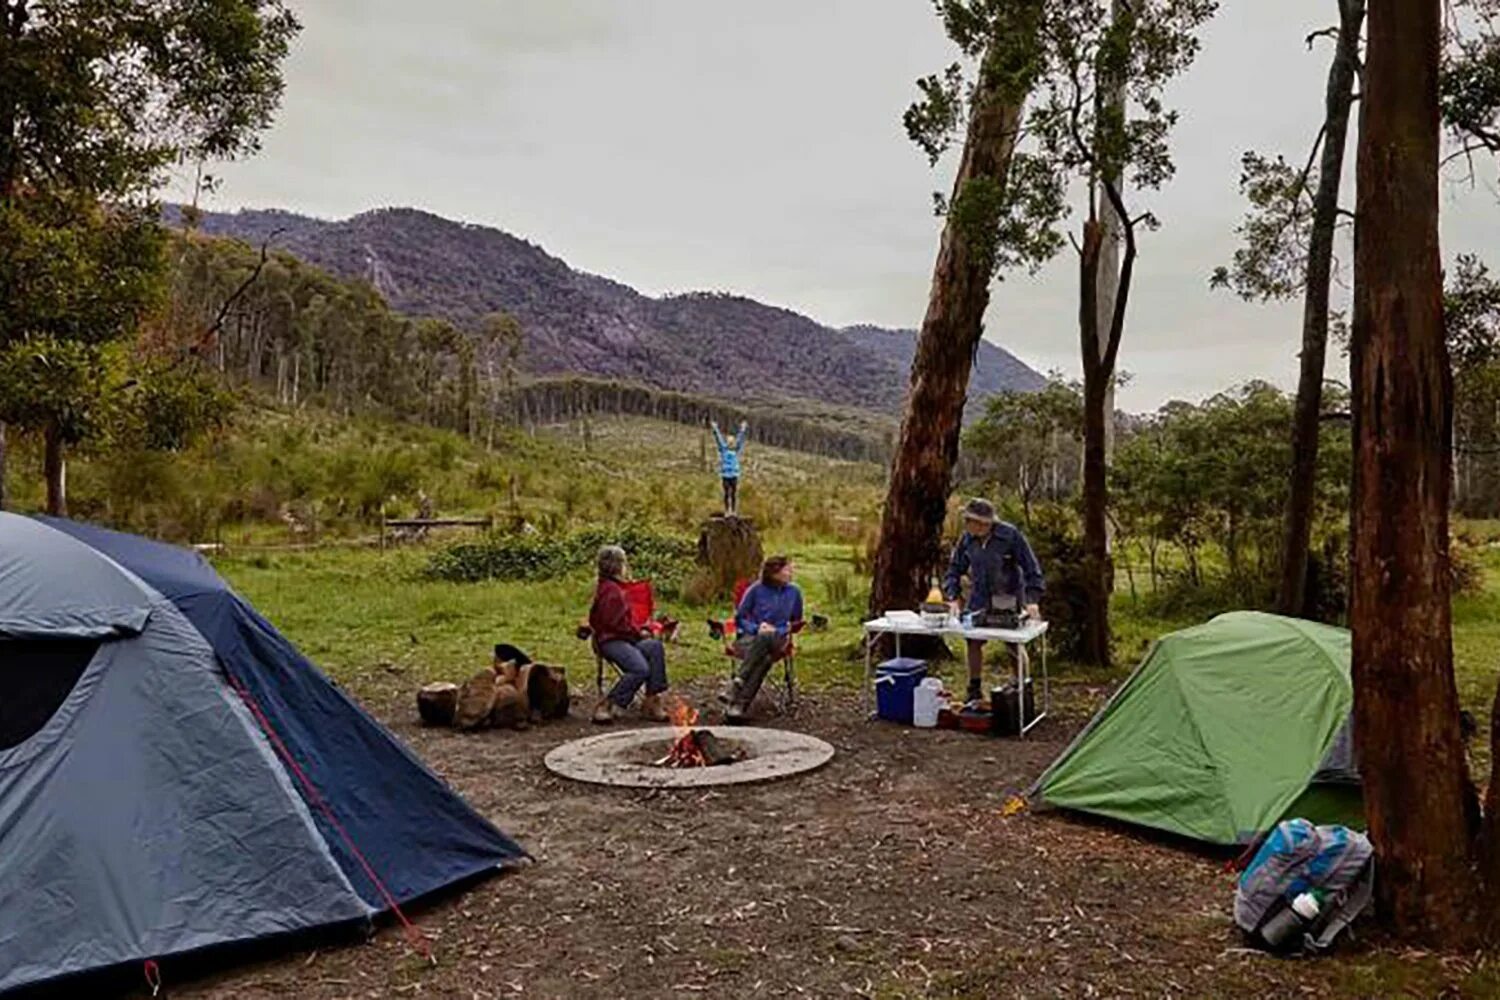 7.10 Кемпинг. Beech fork State Park Camping, США.. Кемпинг в Дагестане в горах. Козлячья гора кемпинг.